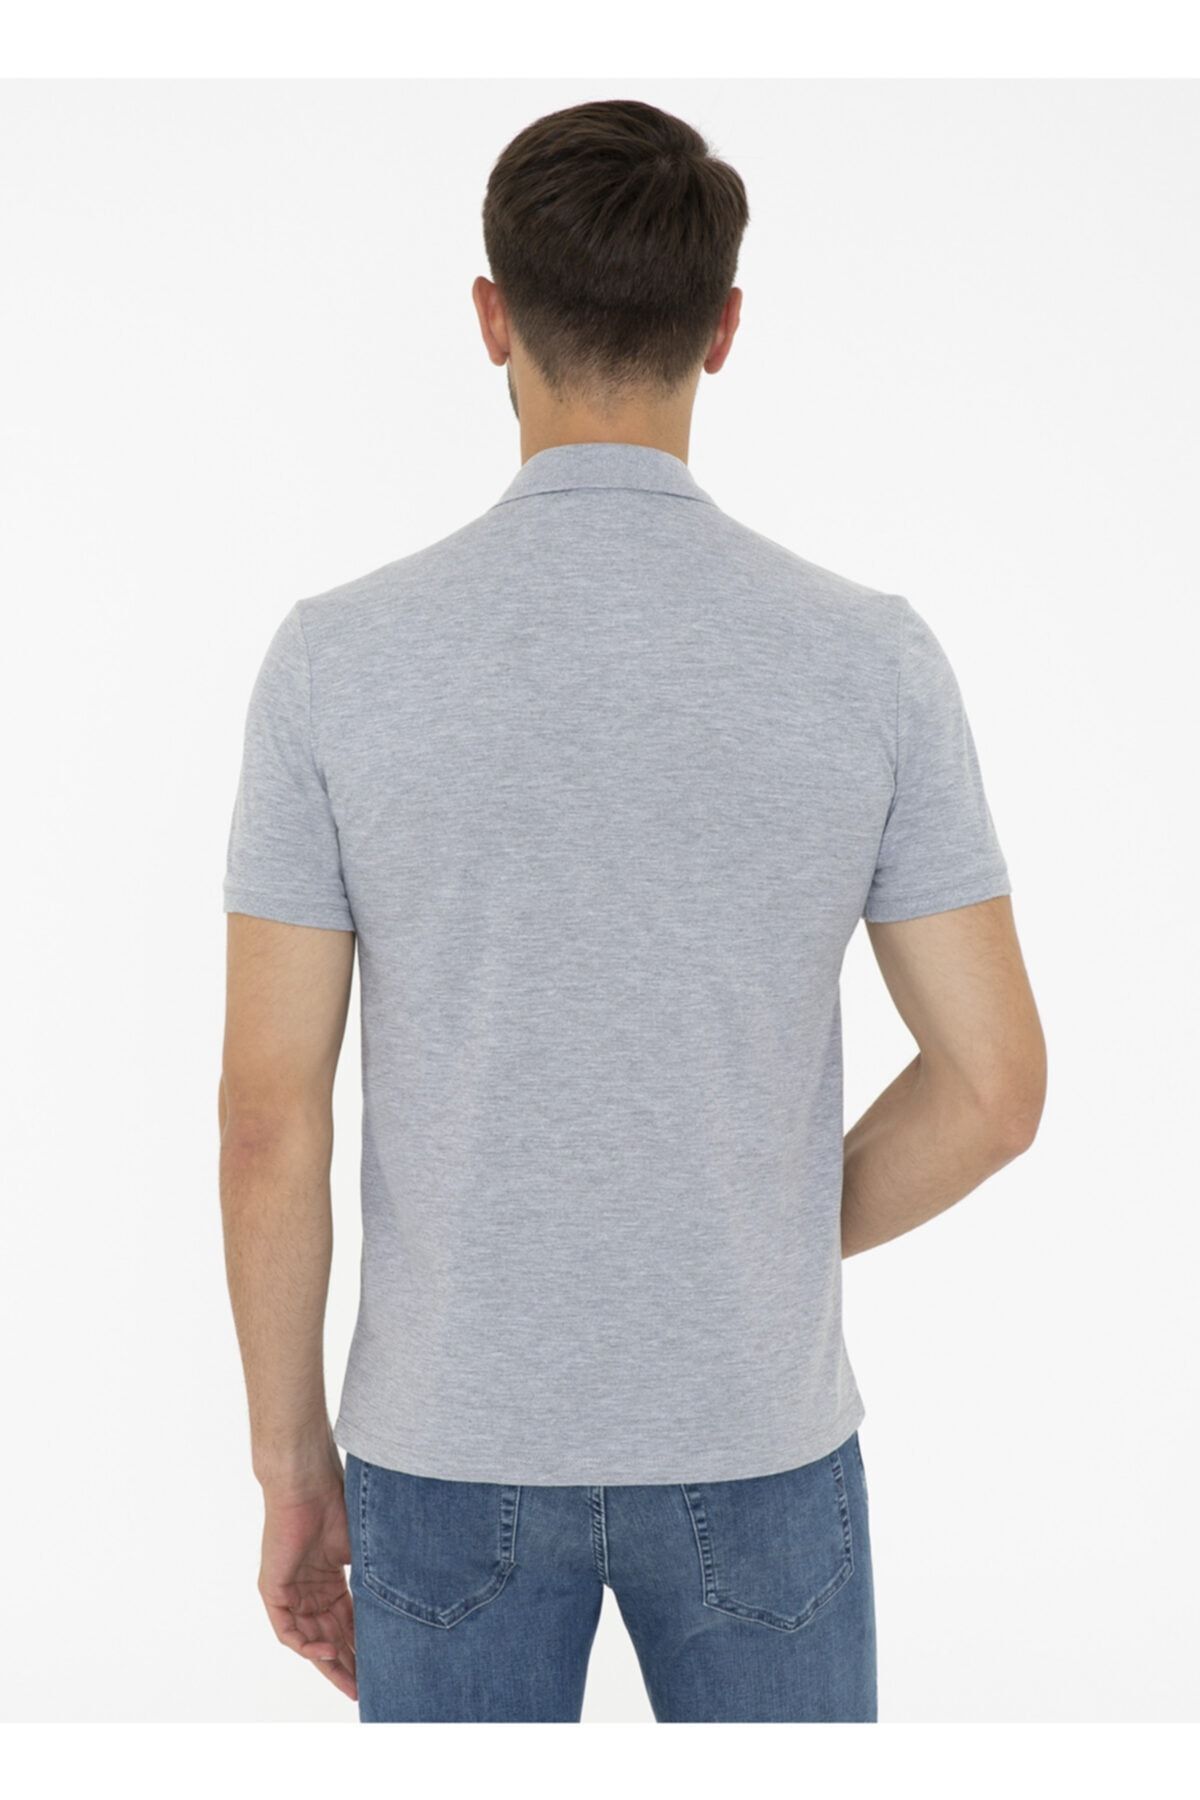 Pierre Cardin T-shirt, 3xl, Gri Melanj